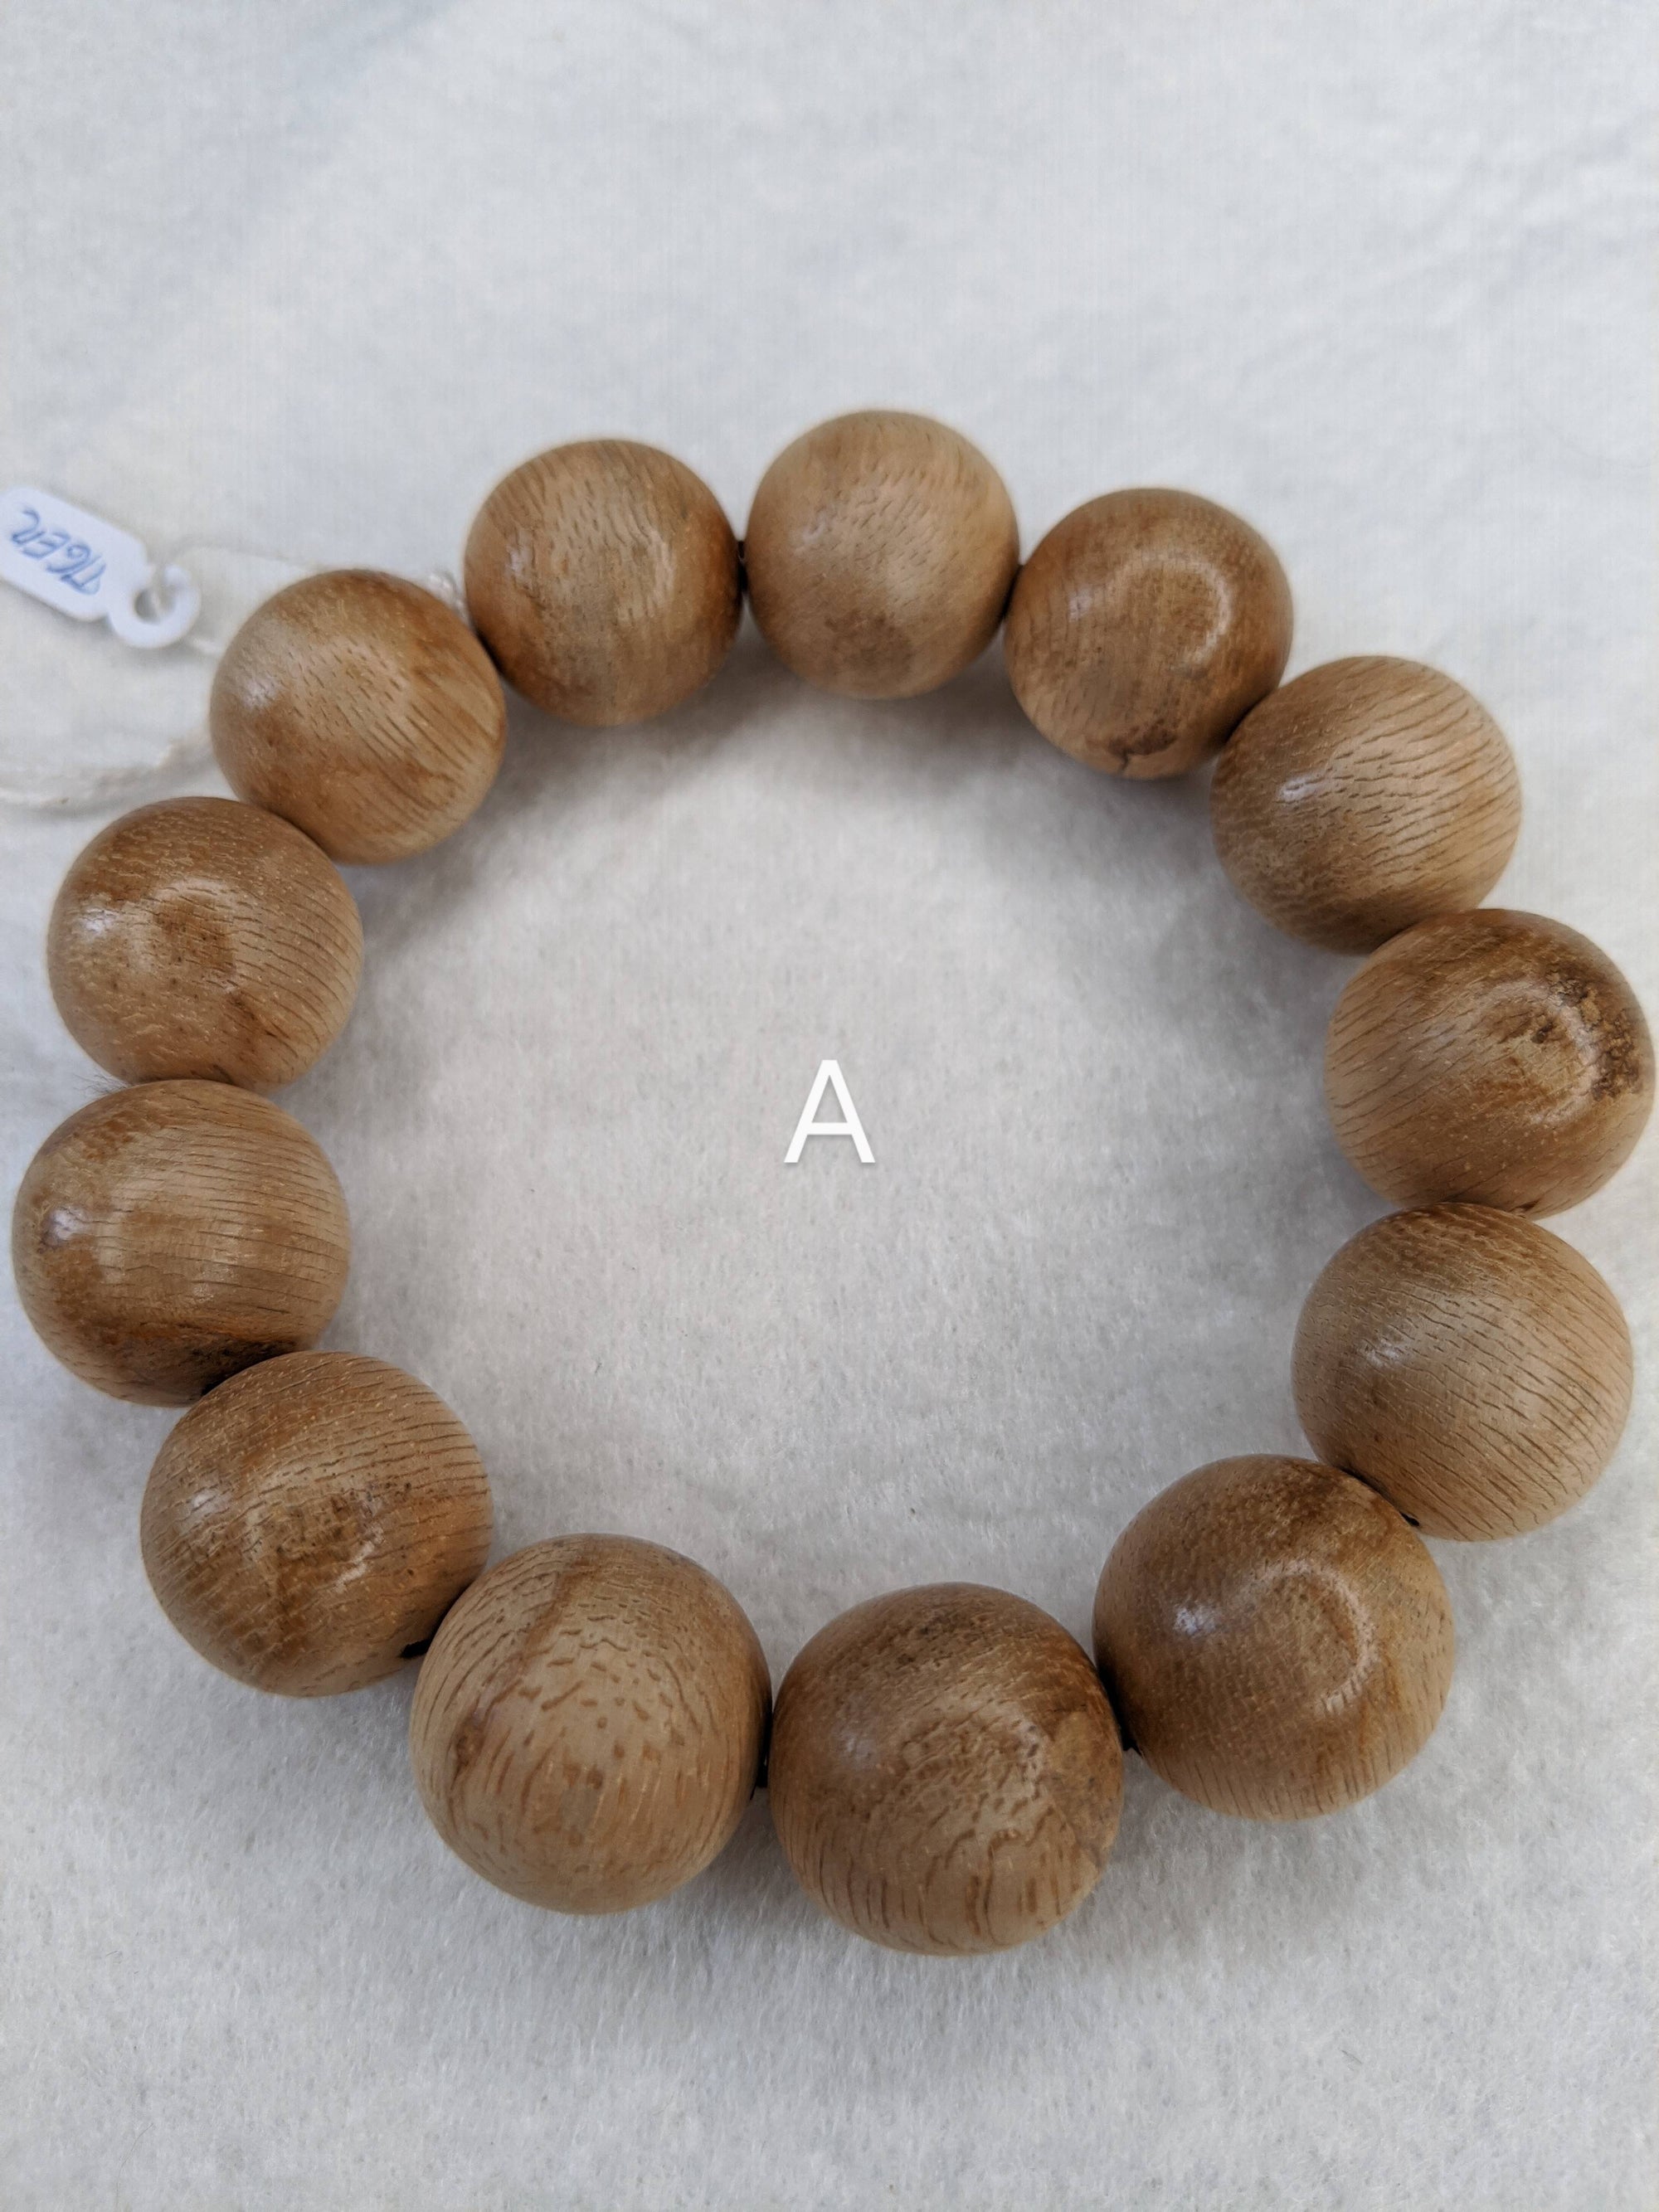 Light Resin Tigerwood Wild Agarwood Bracelet 13 beads 15g 18mm - Pattern A